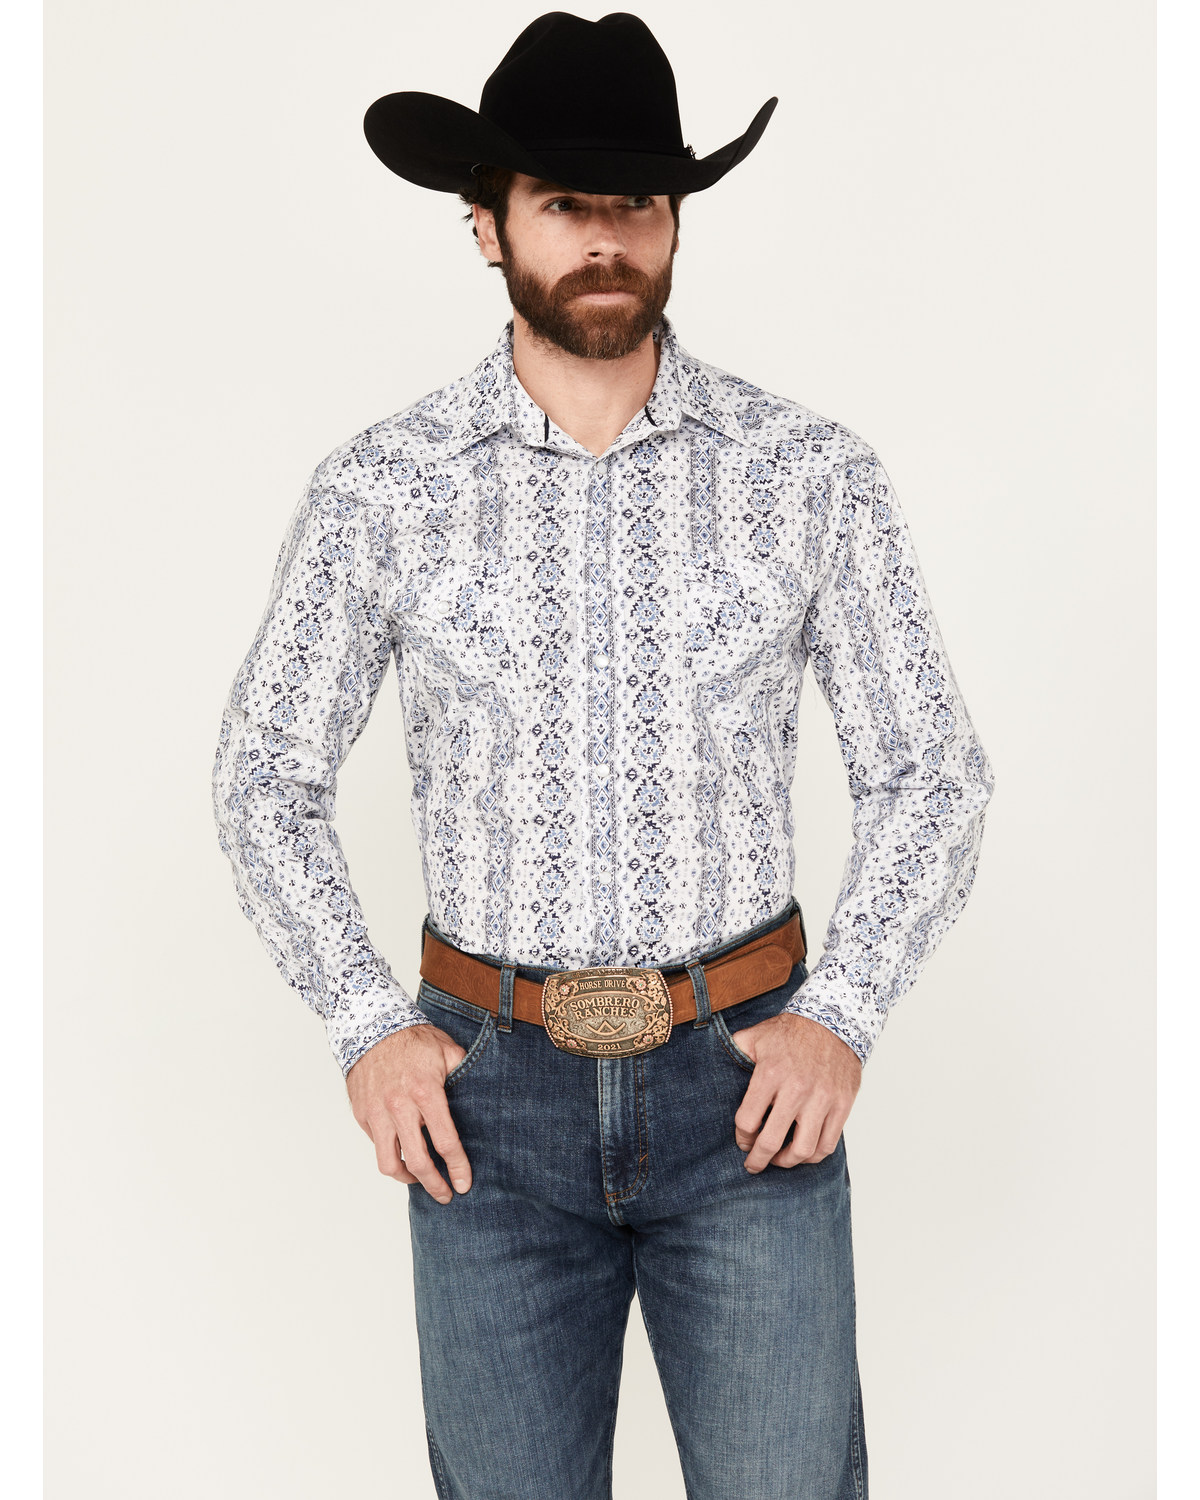 Rough Stock by Panhandle Men's Southwestern Print Long Sleeve Pearl Snap Western Shirt